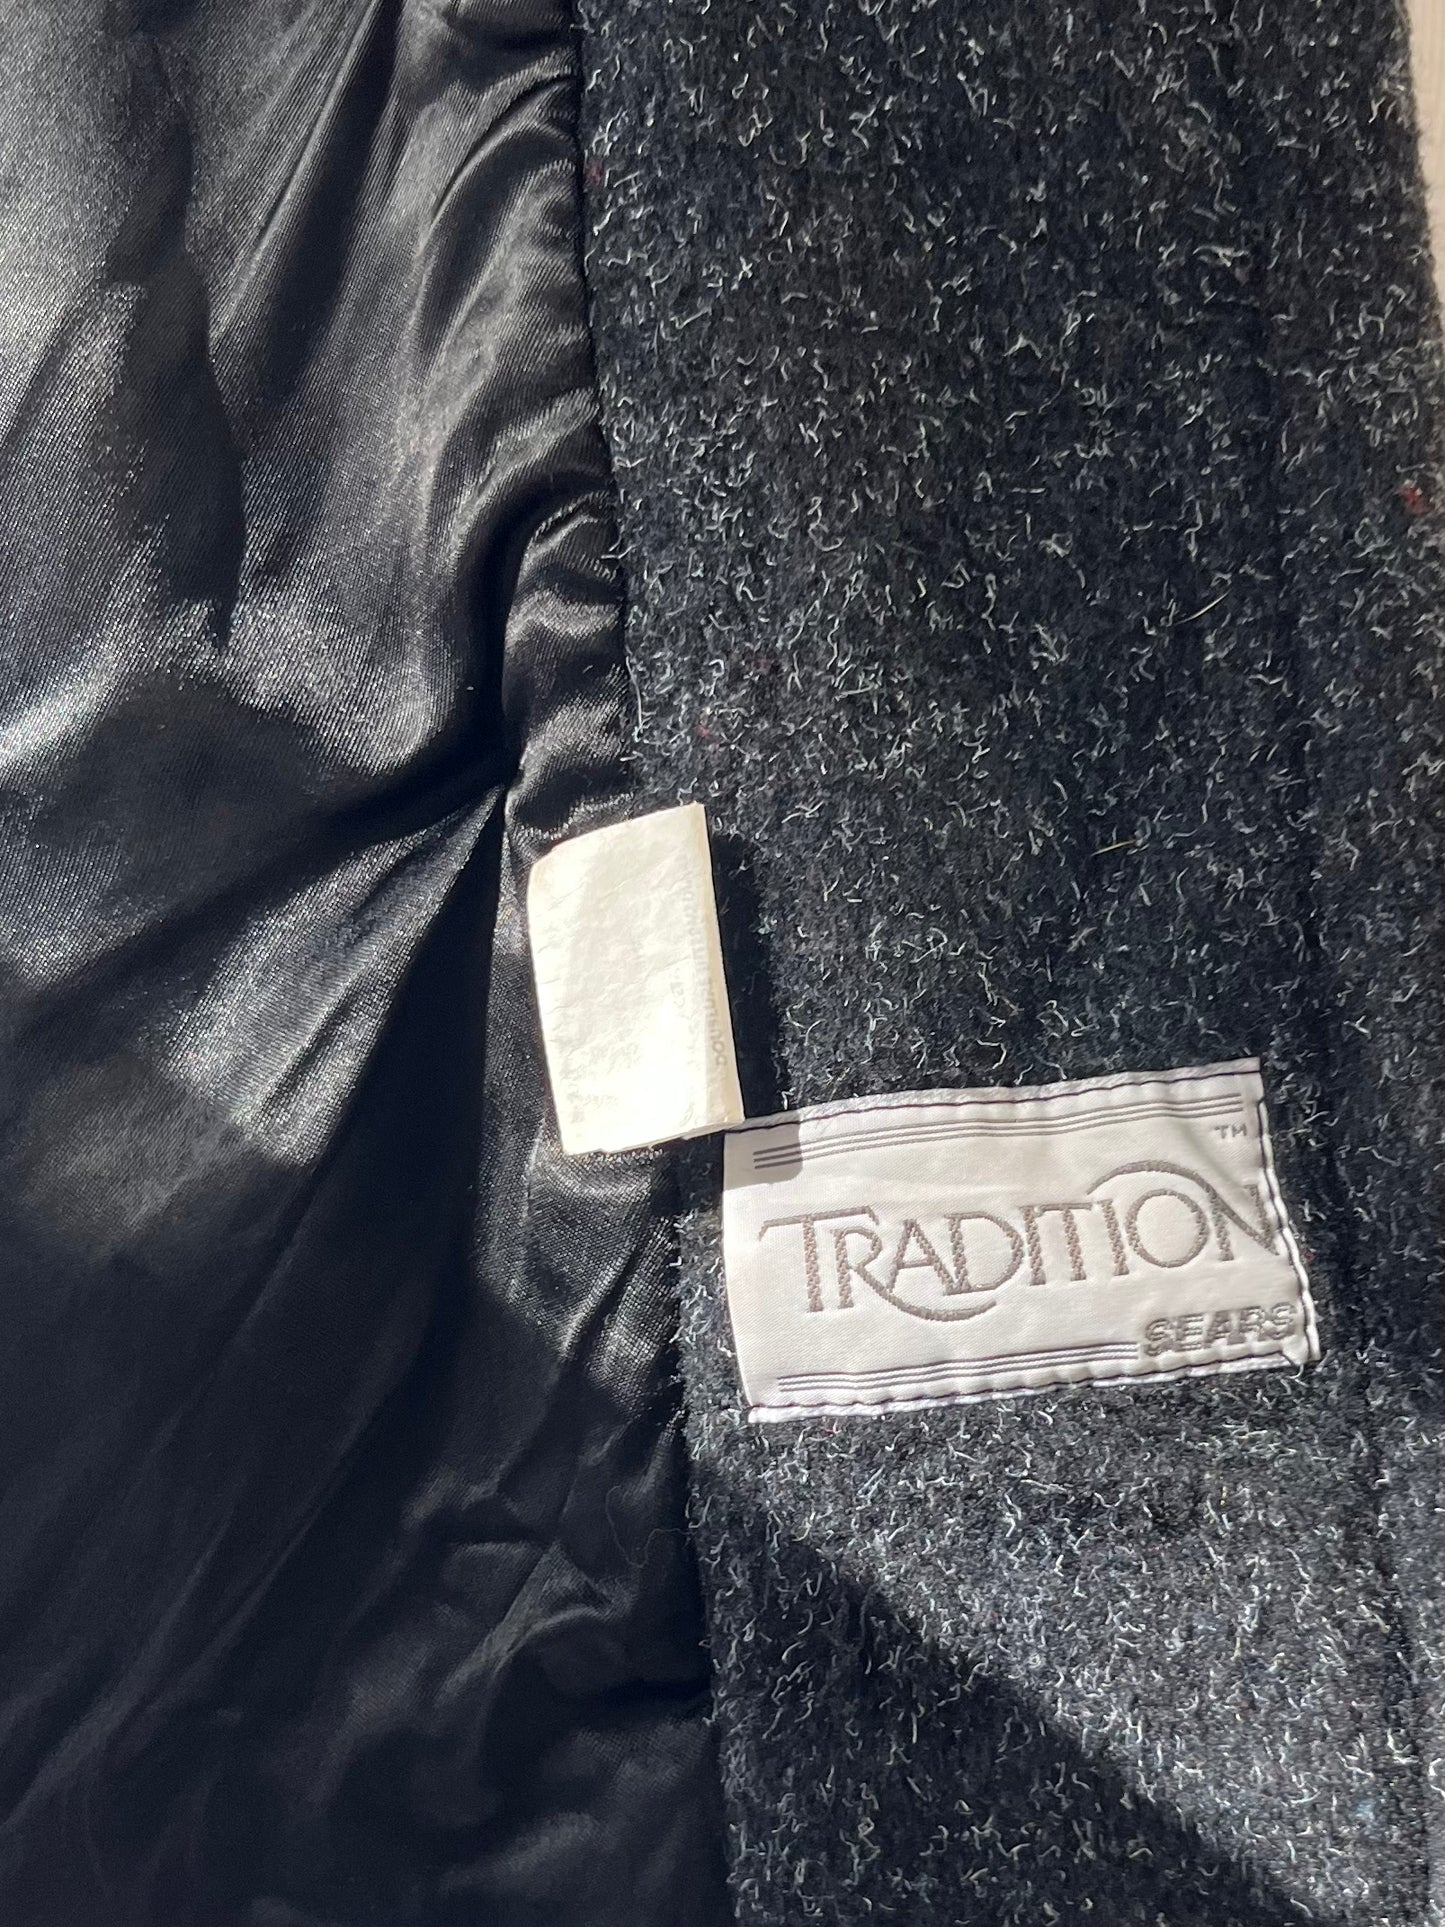 90s 'Sears' Gray Wool Nylon Jacket / Medium